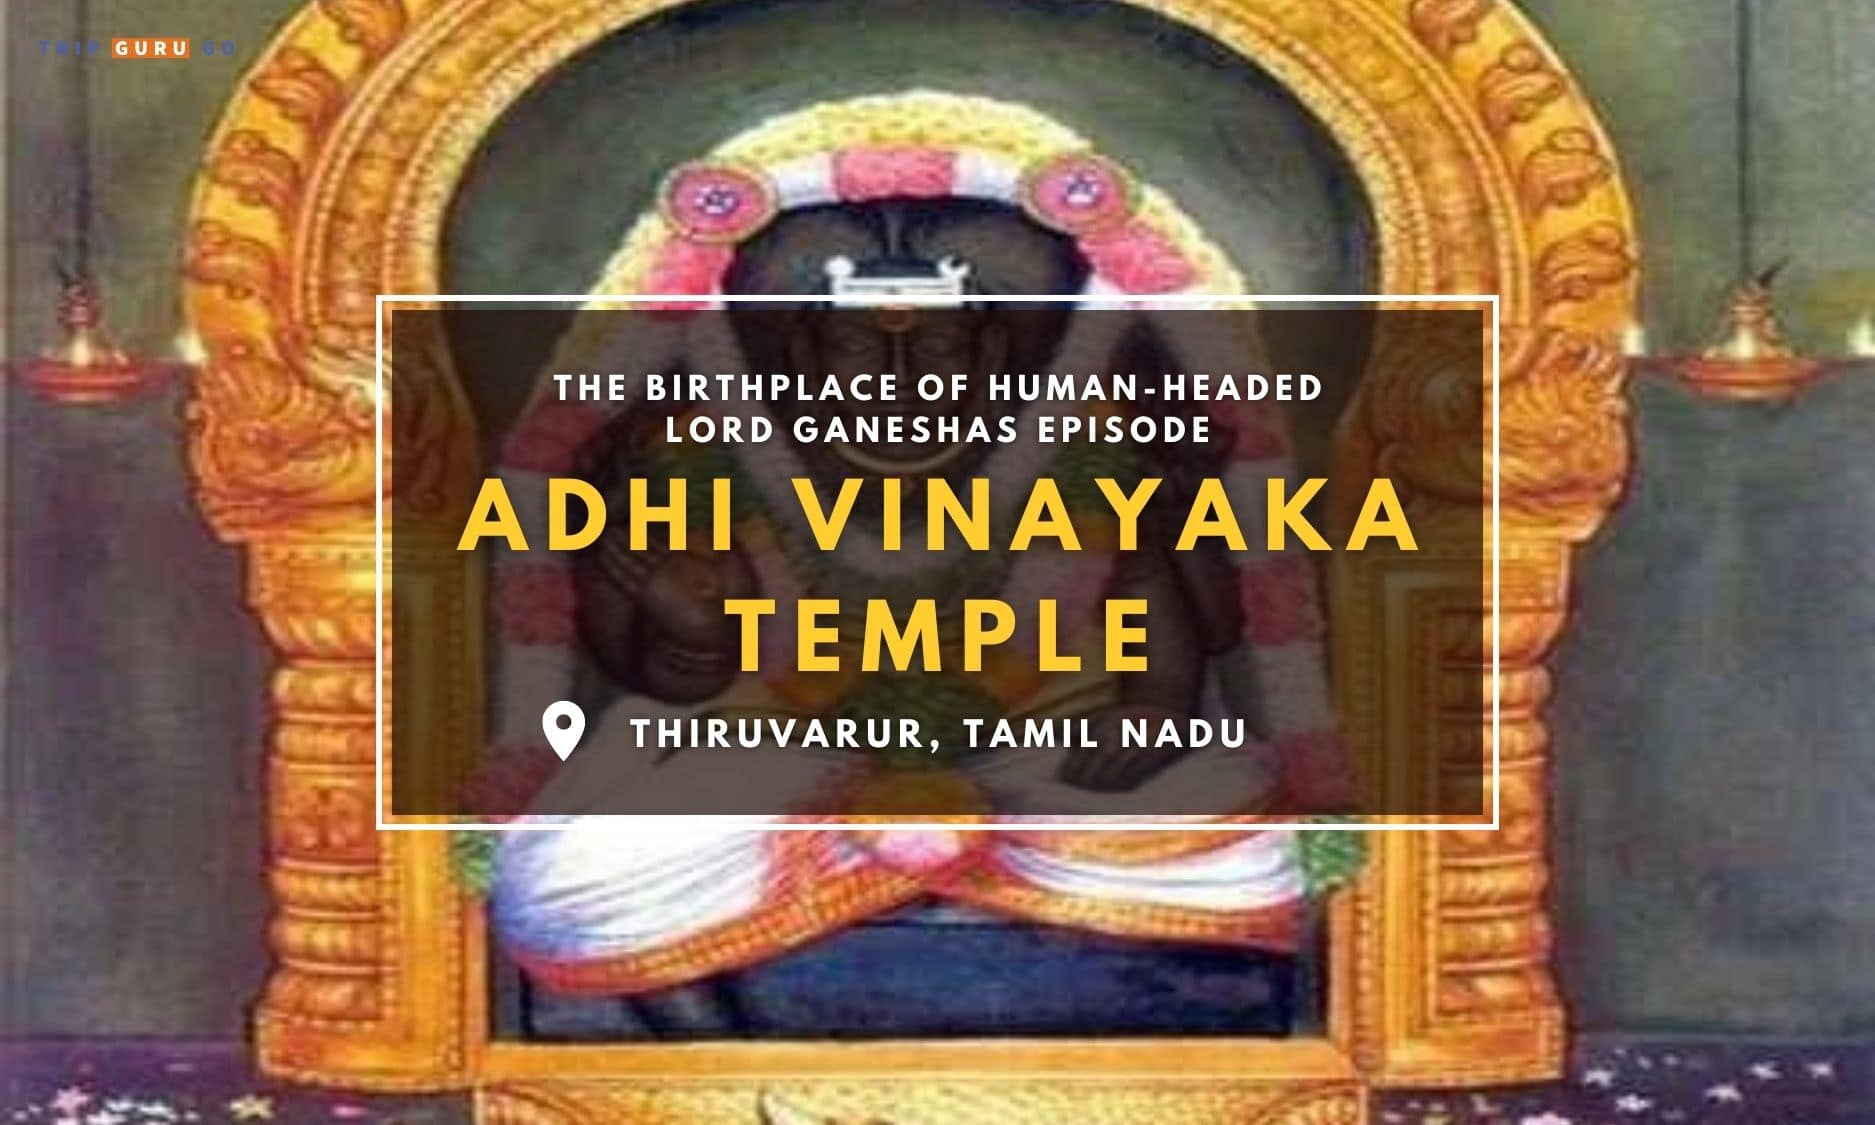 Adhi Vinayaka Temple: The Birthplace of Human-Headed Lord Ganesha